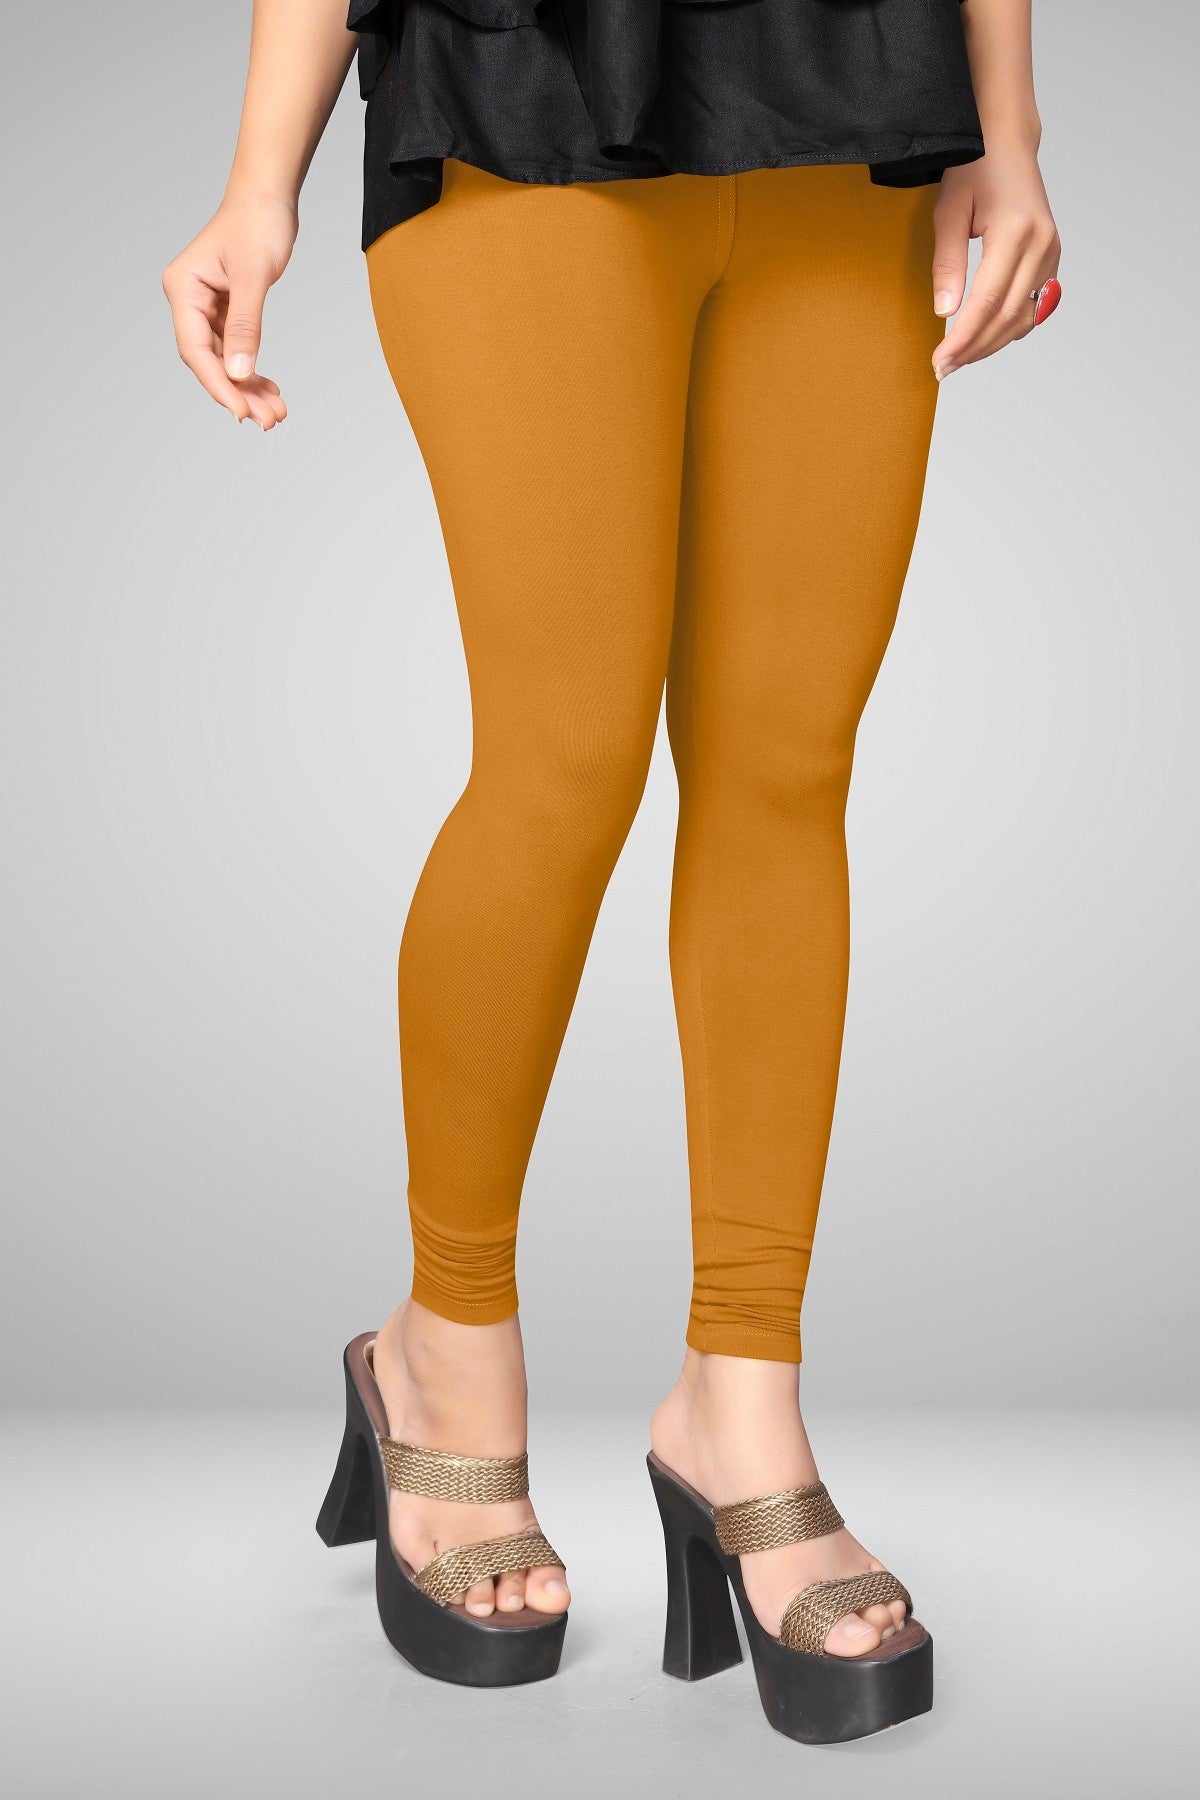 Women Oversized Ankle Length Yoga Pants High Rise Pumpkin Web Spider Print  Plus Size Leggings Workout Casual Tight Trousers (XL, A Orange) -  Walmart.com